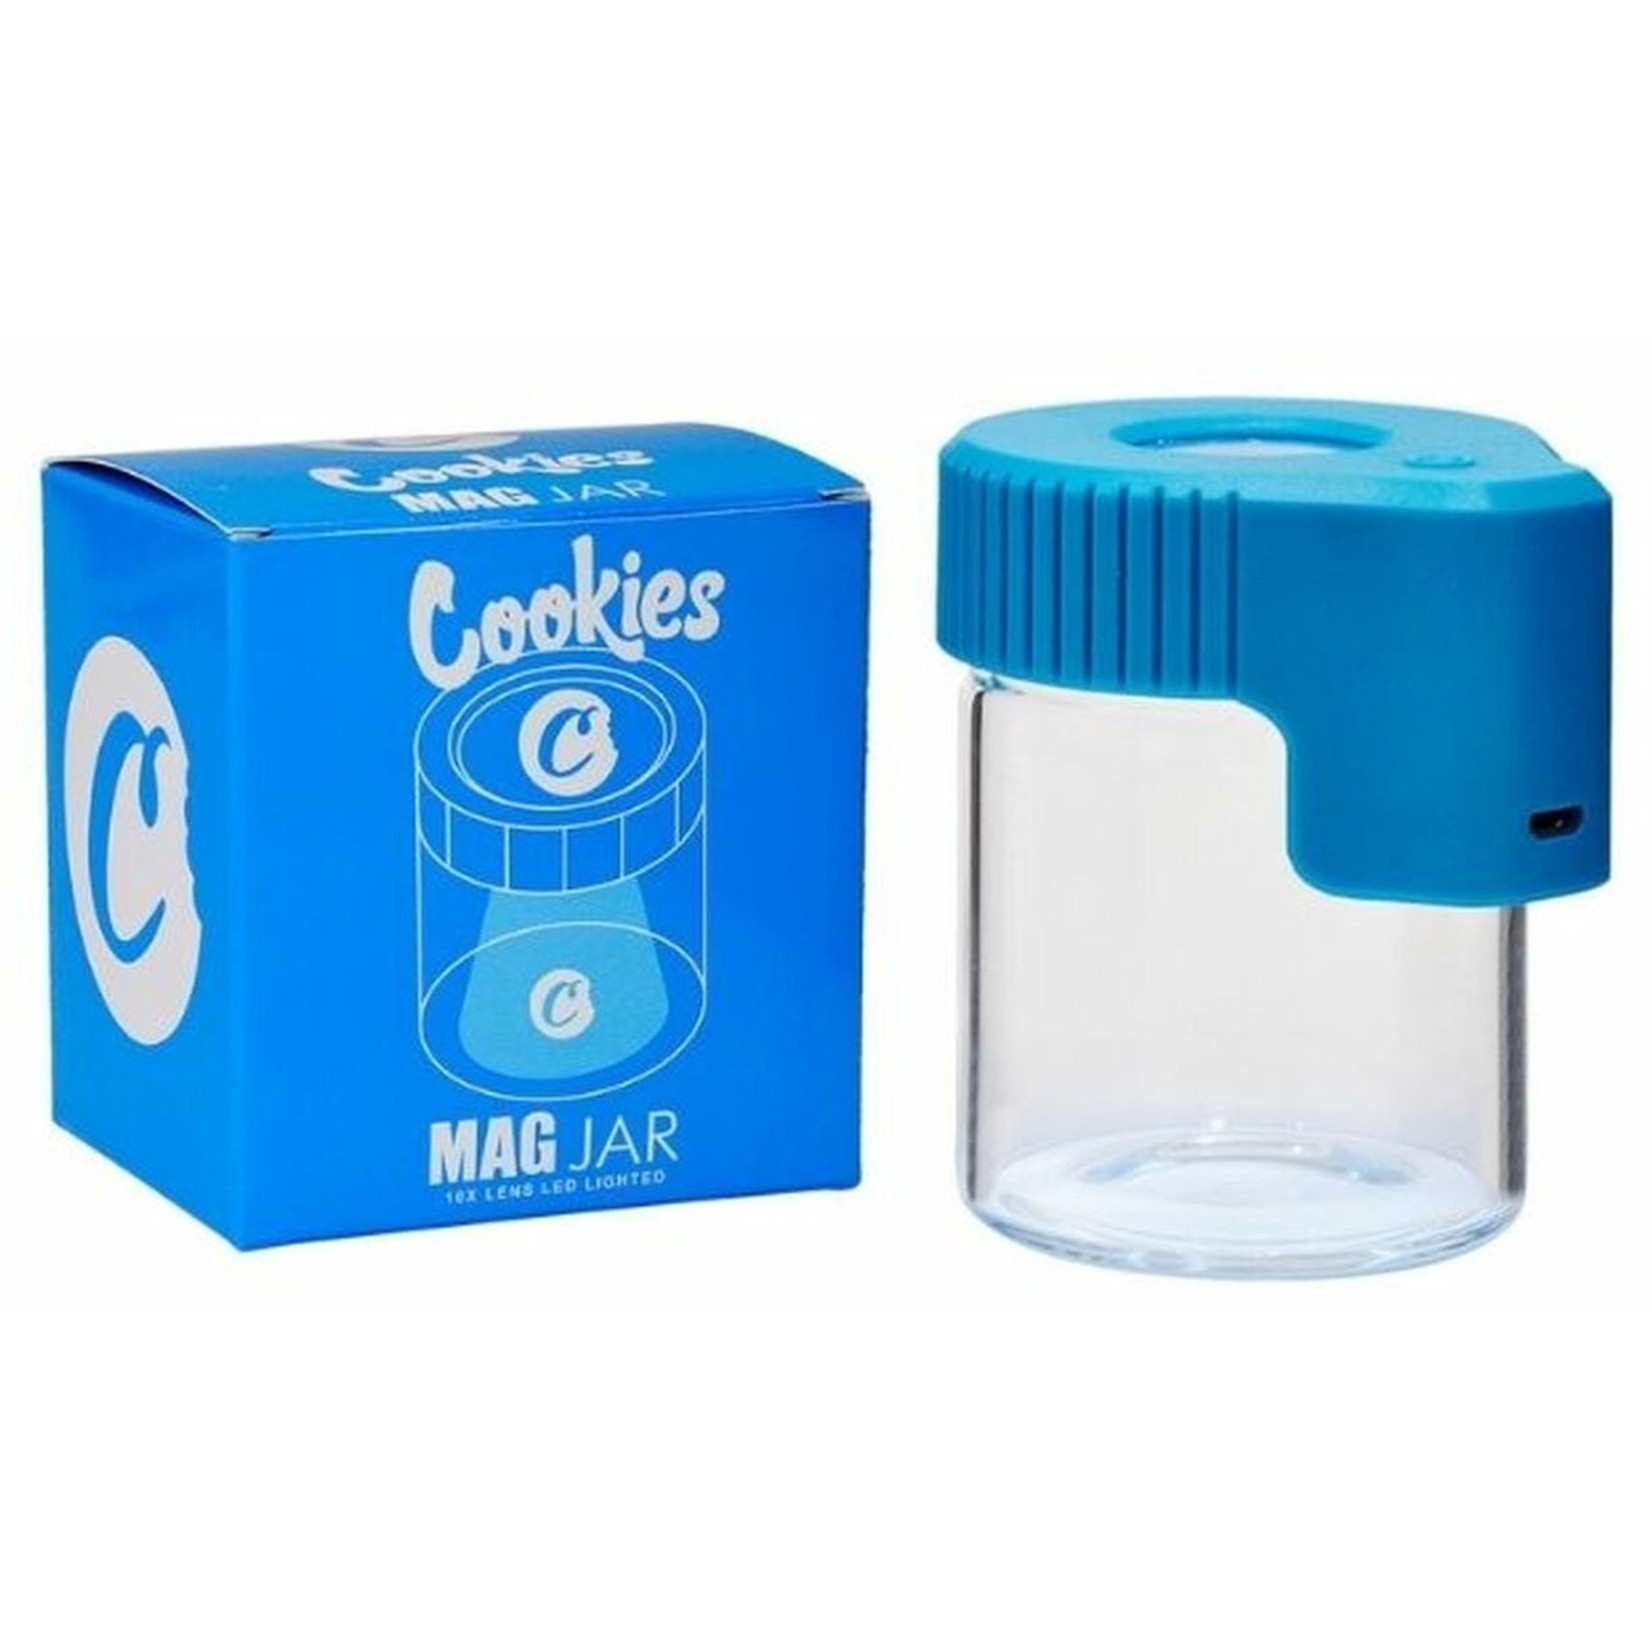 Cookies Cookies Mag Jar LED Light 10X Magnification